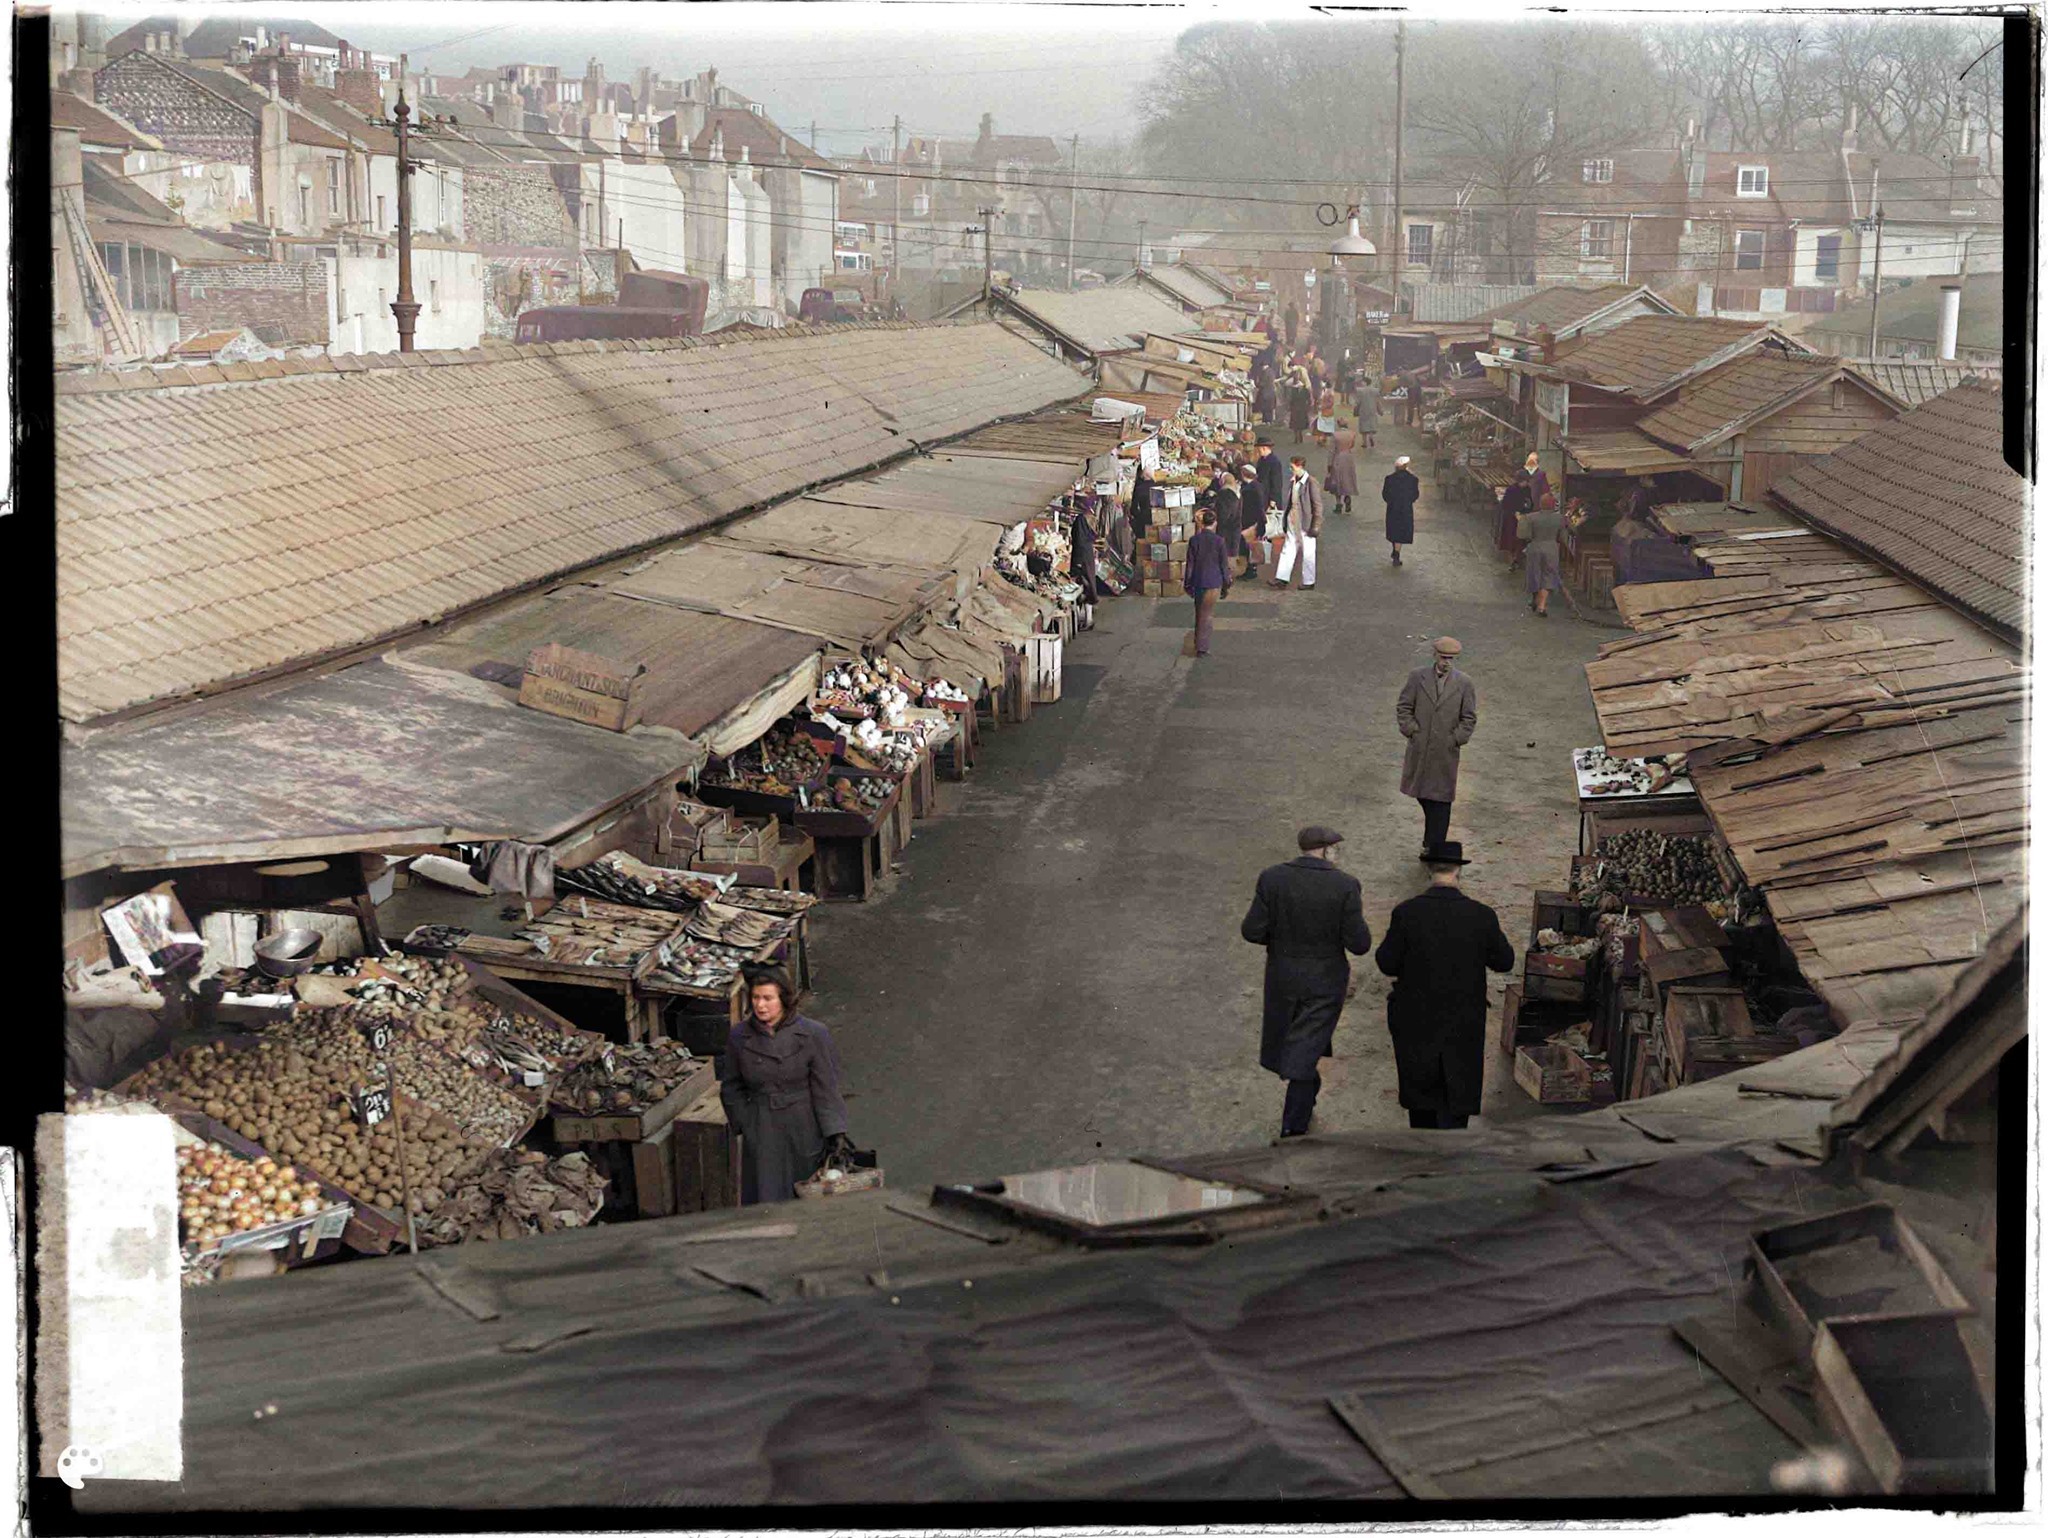 The open market, Brighton, 1953